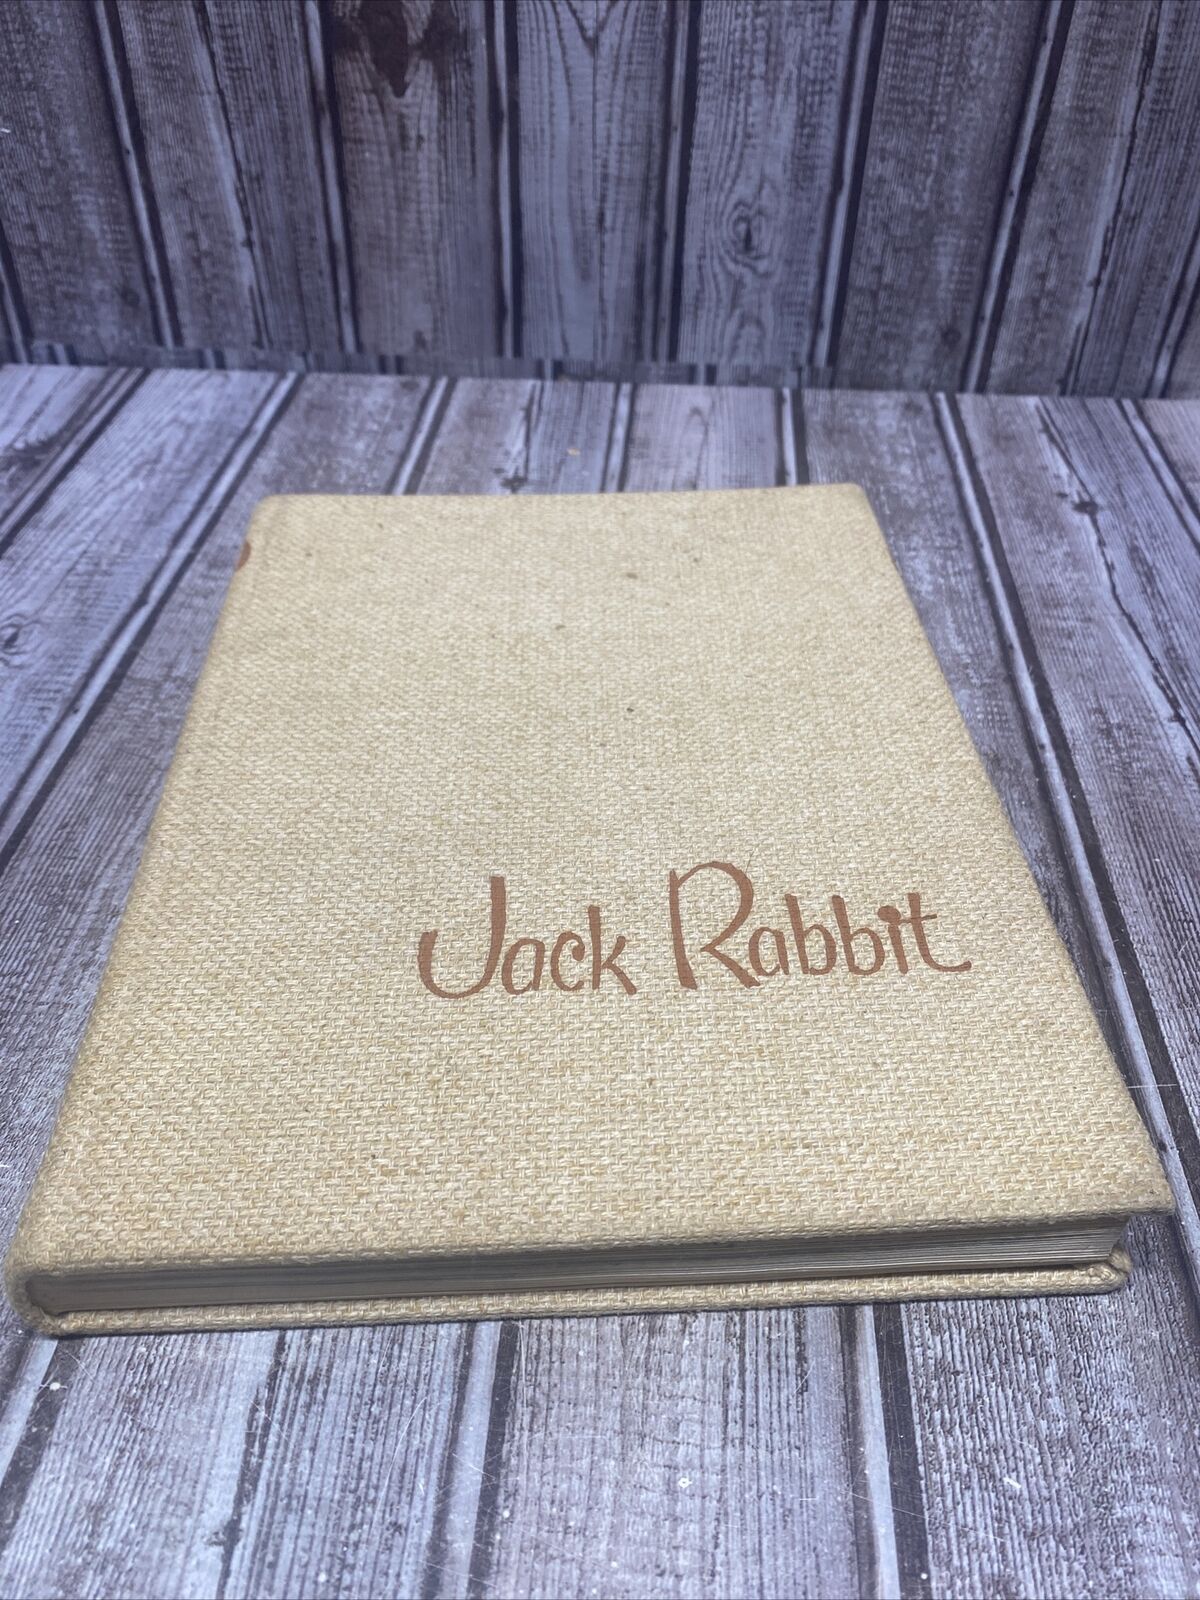 College Yearbook 1957 South Dakota State Jack Rabbit Brookings